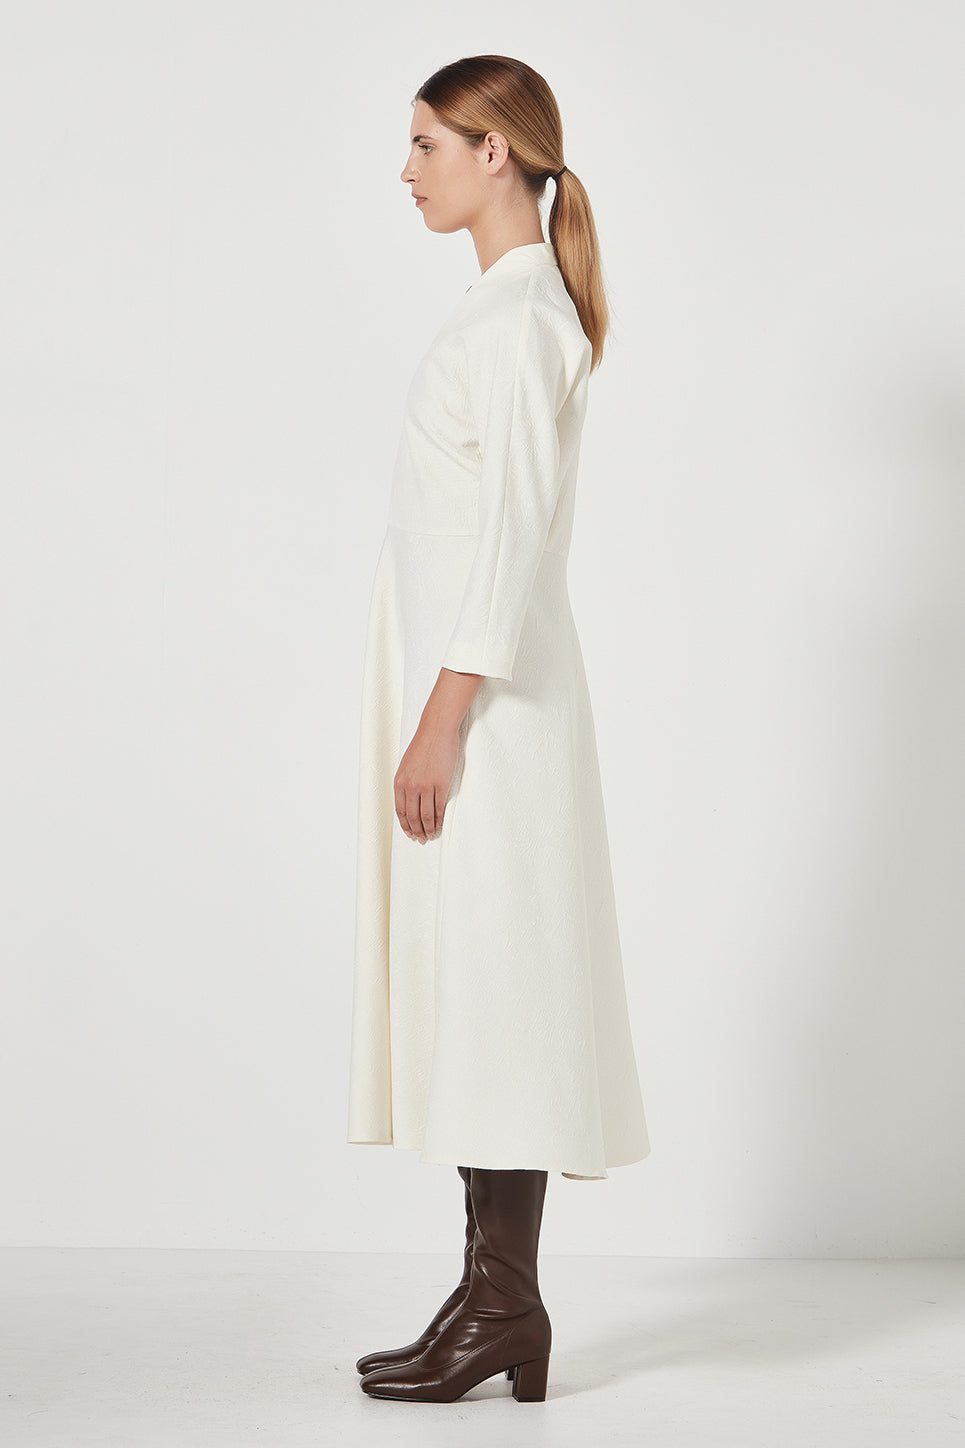 The Amelia Dress in Ivory Jacquard